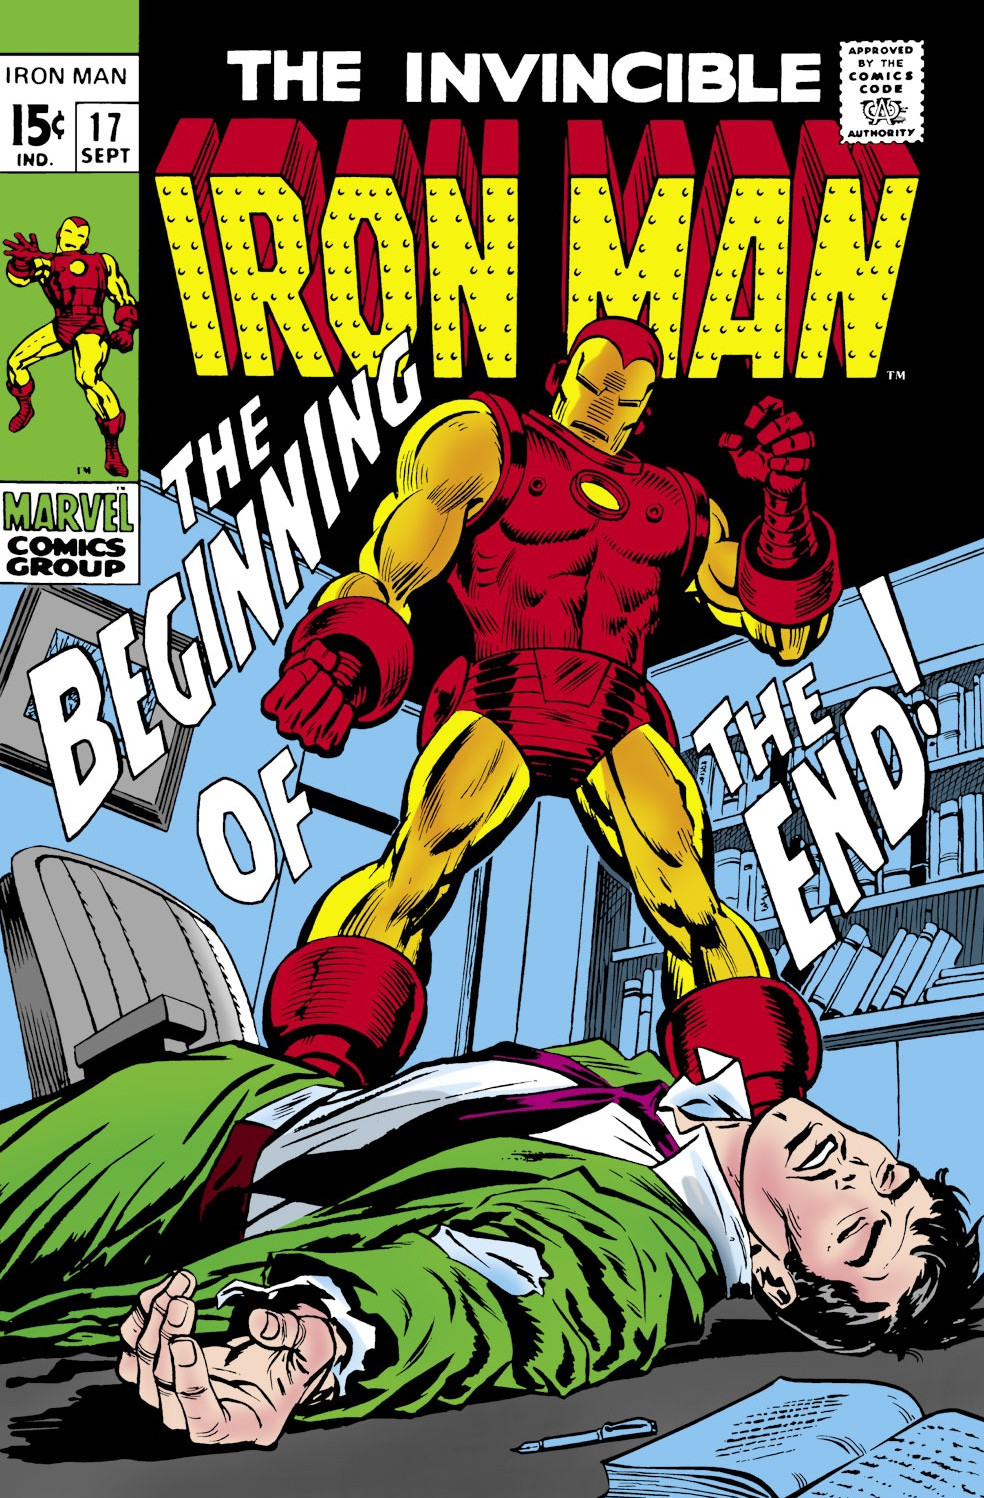 Comicmaniacs: IRON MAN - Οι 5 πιο κλασικές στιγμές του χρυσού εκδικητή